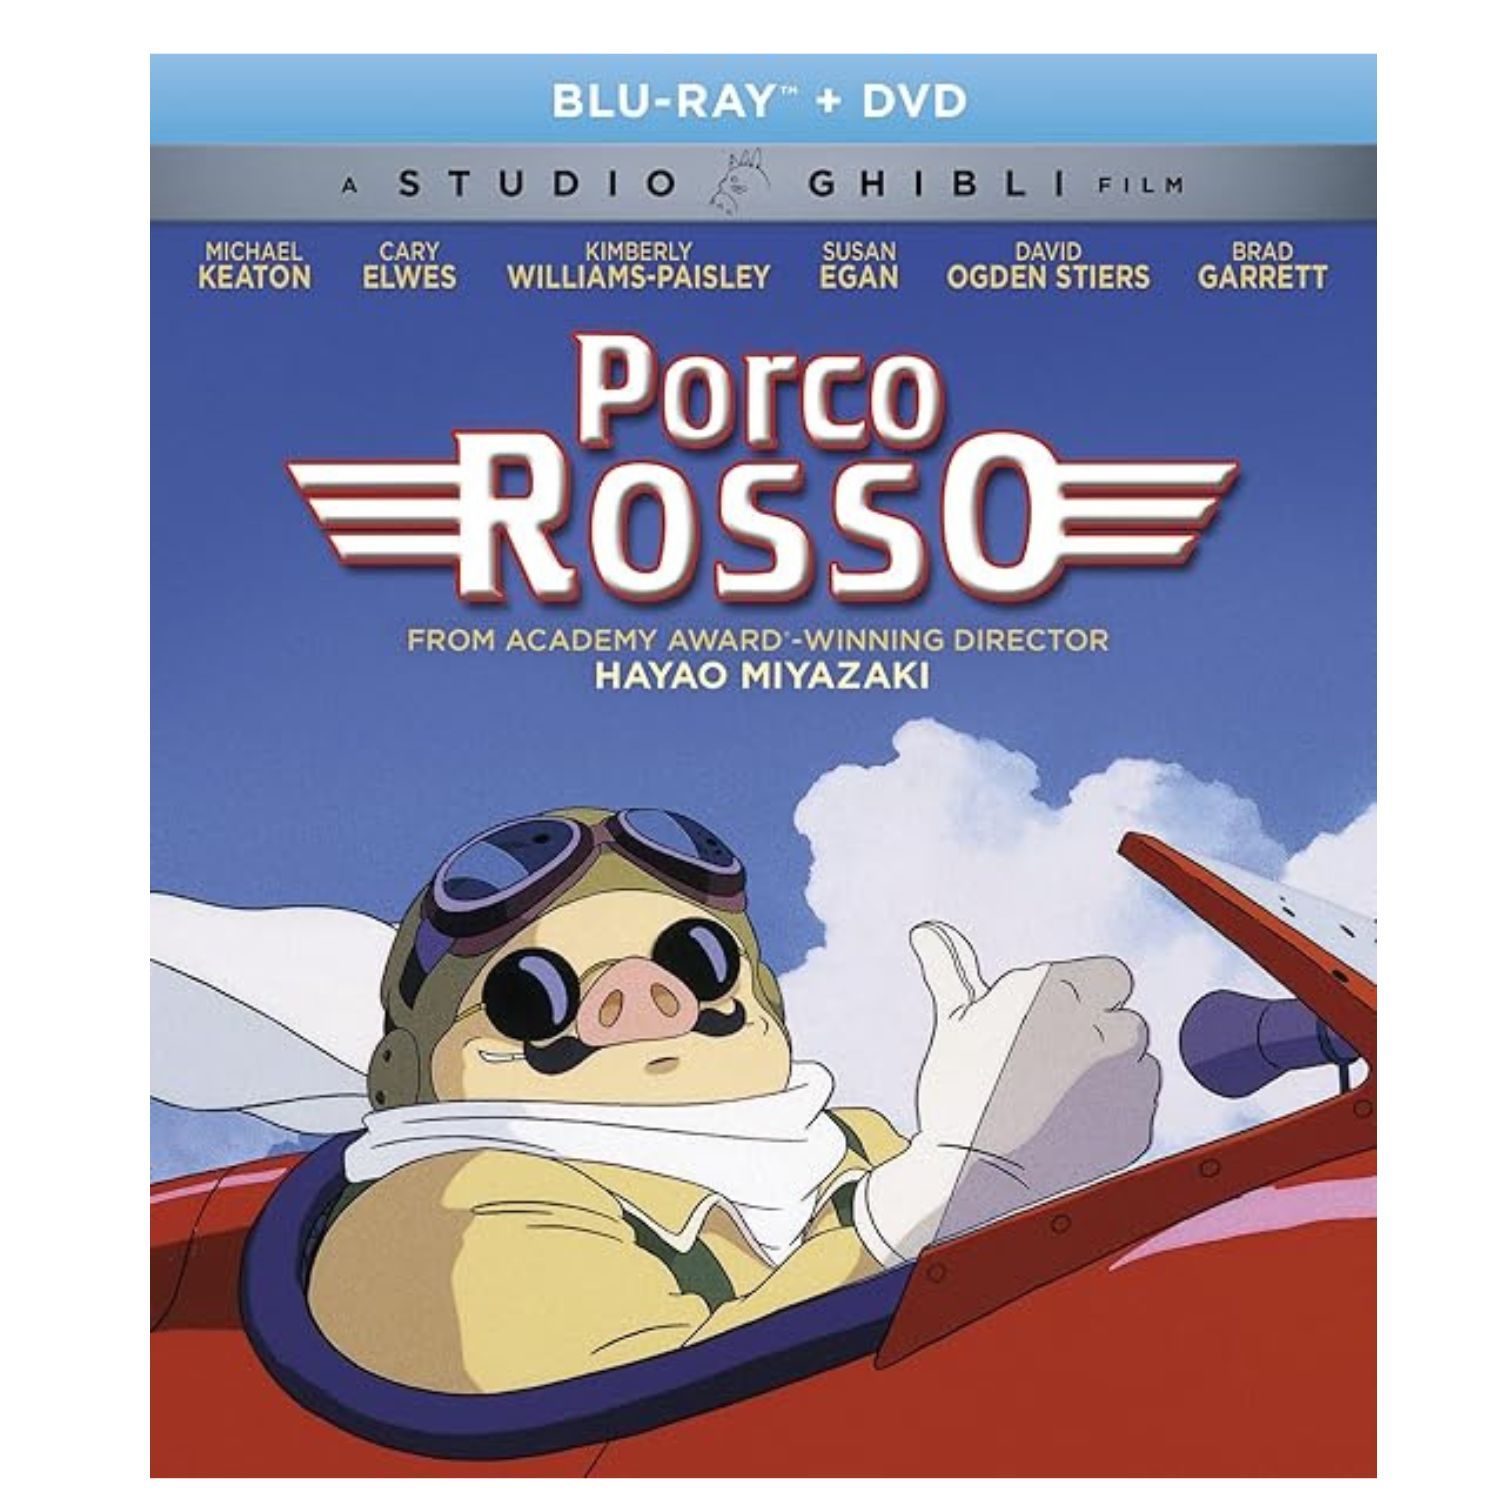 Porco Rosso Blu-ray cover